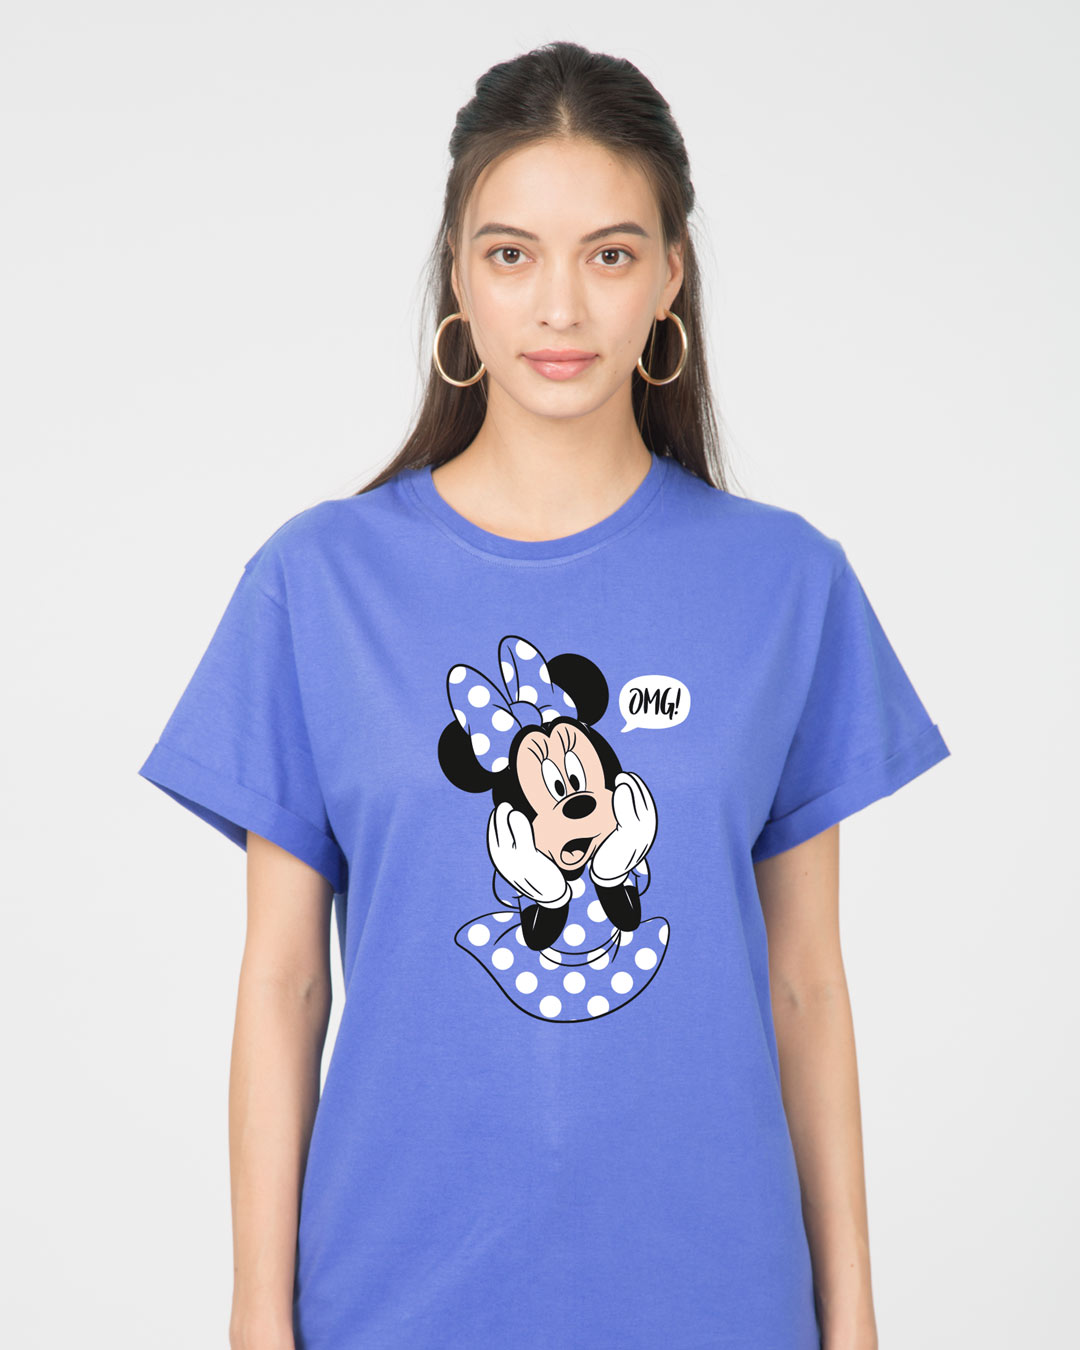 Minnie Says Omg Boyfriend T-Shirt (DL)